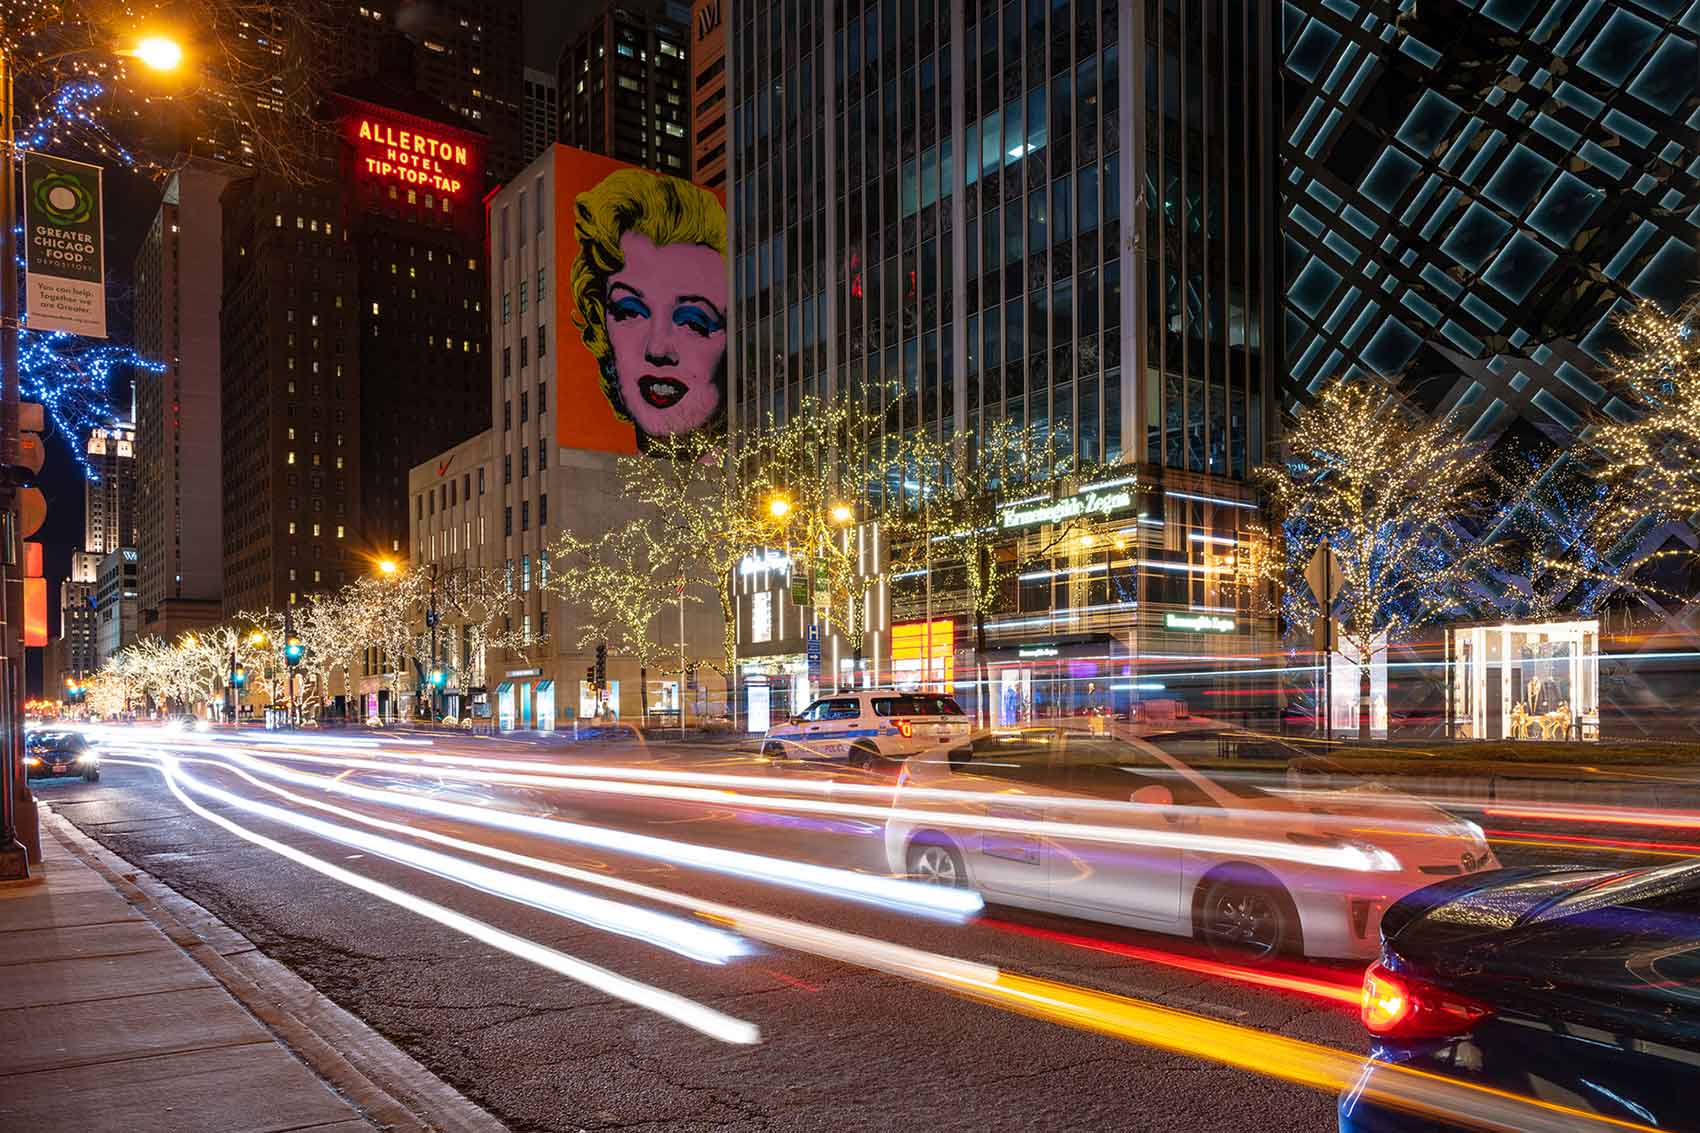 Mural of Andy Warhol's Marilyn Monroe in Michigan Avenue